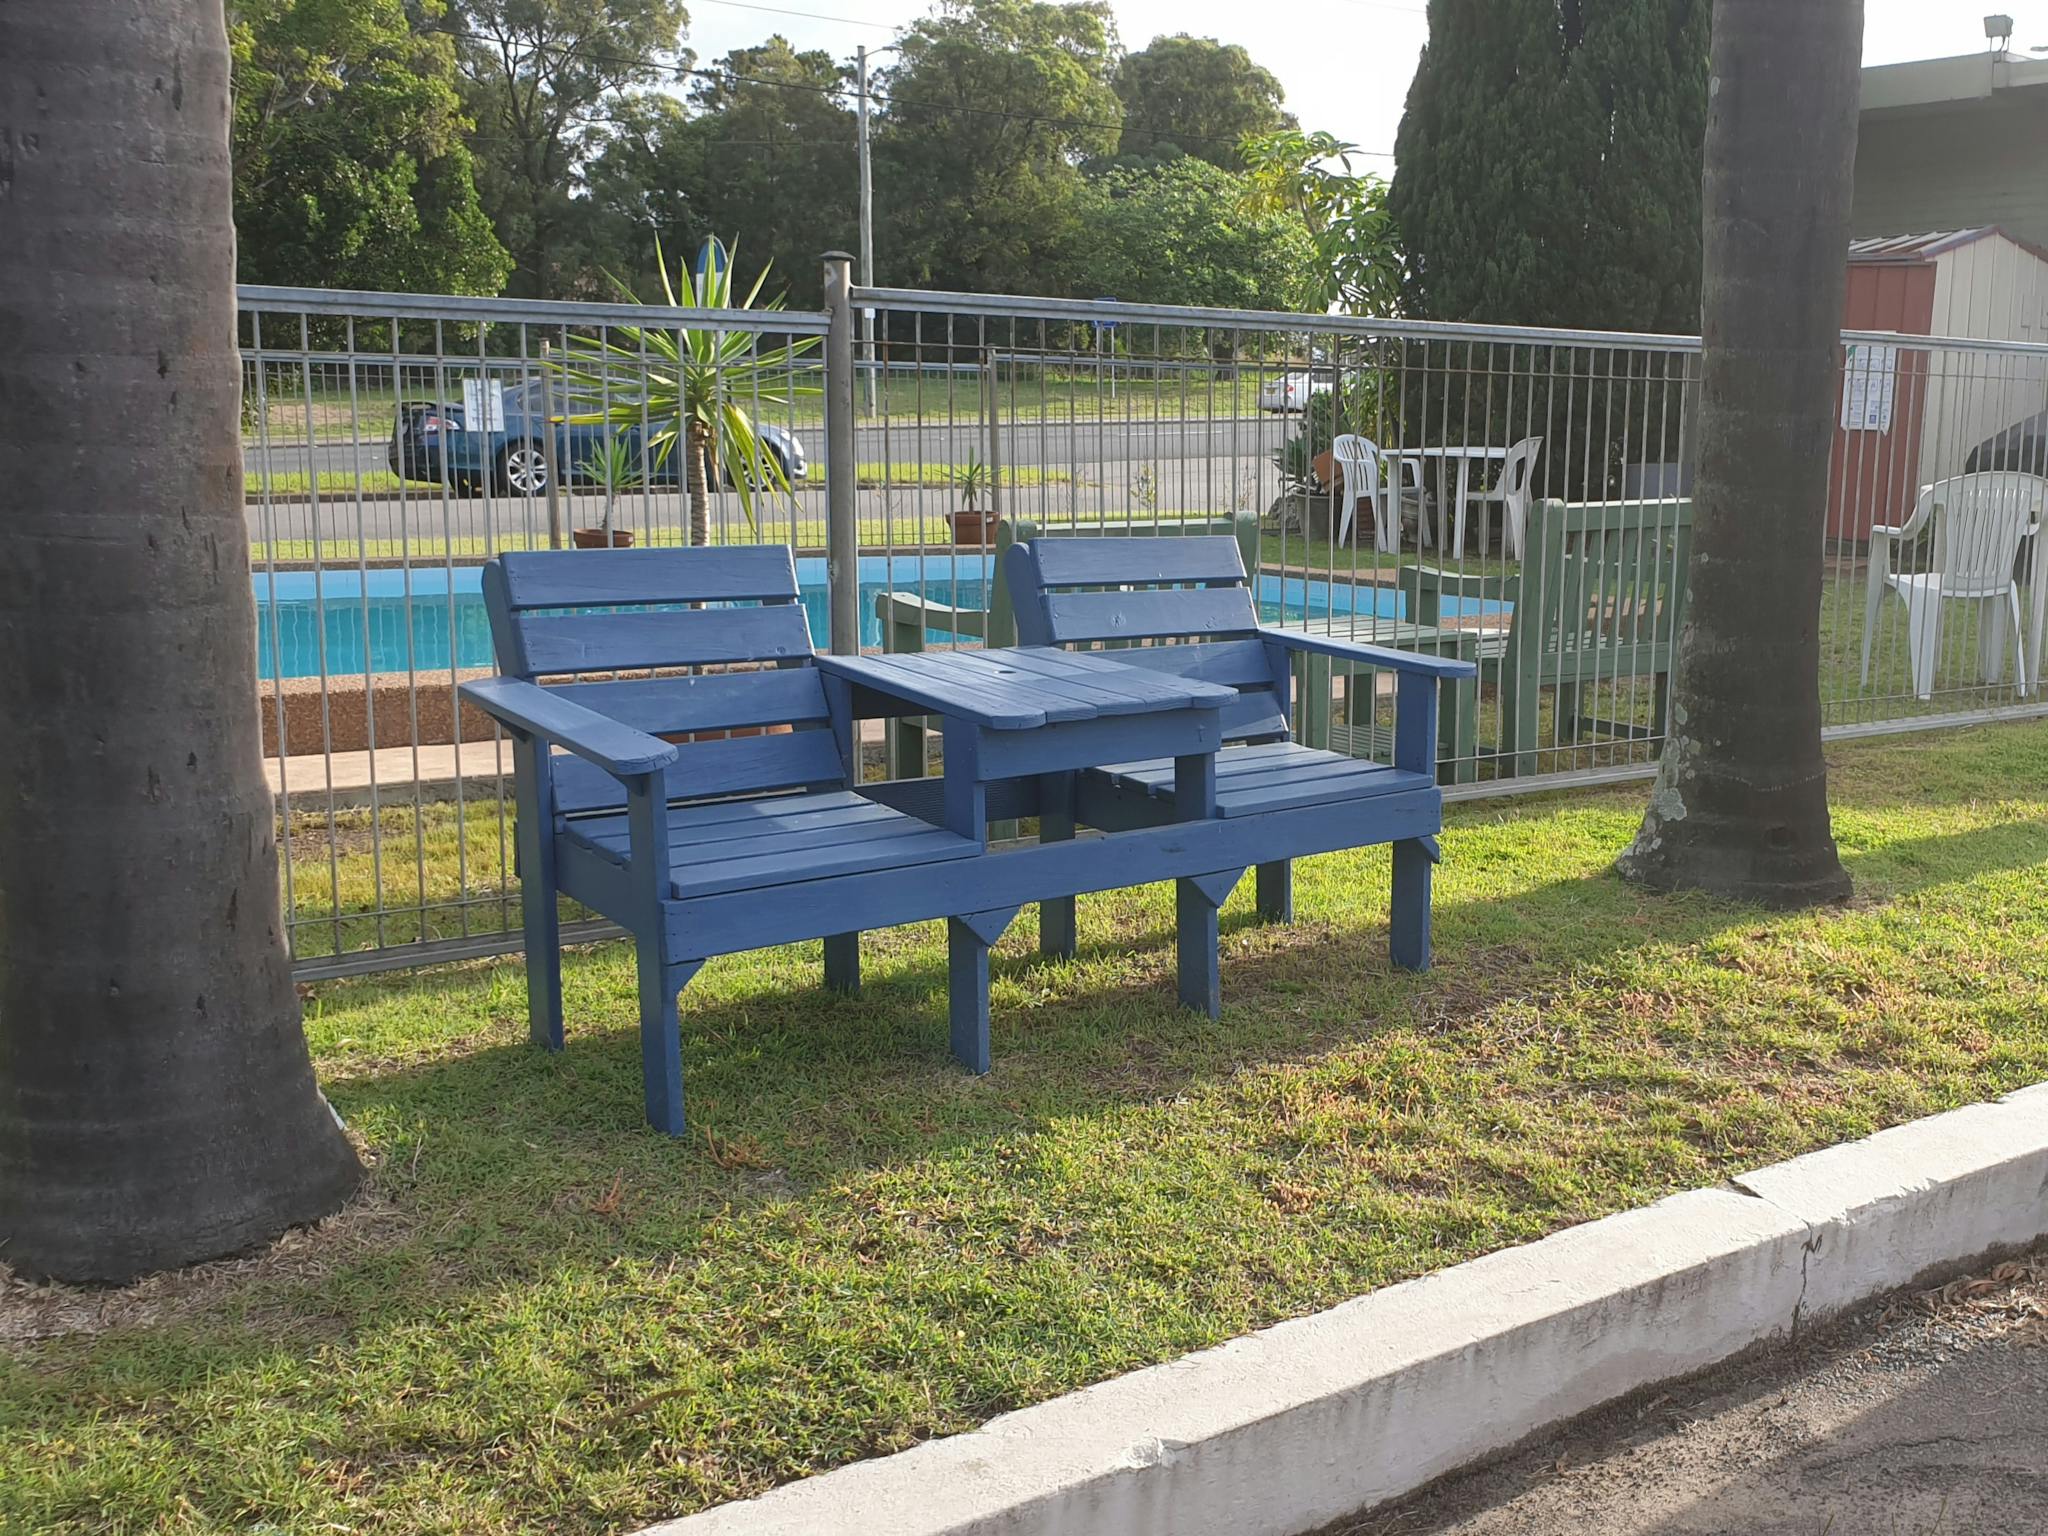 Blue Jack & Jill seat under palm trees outside pool fence